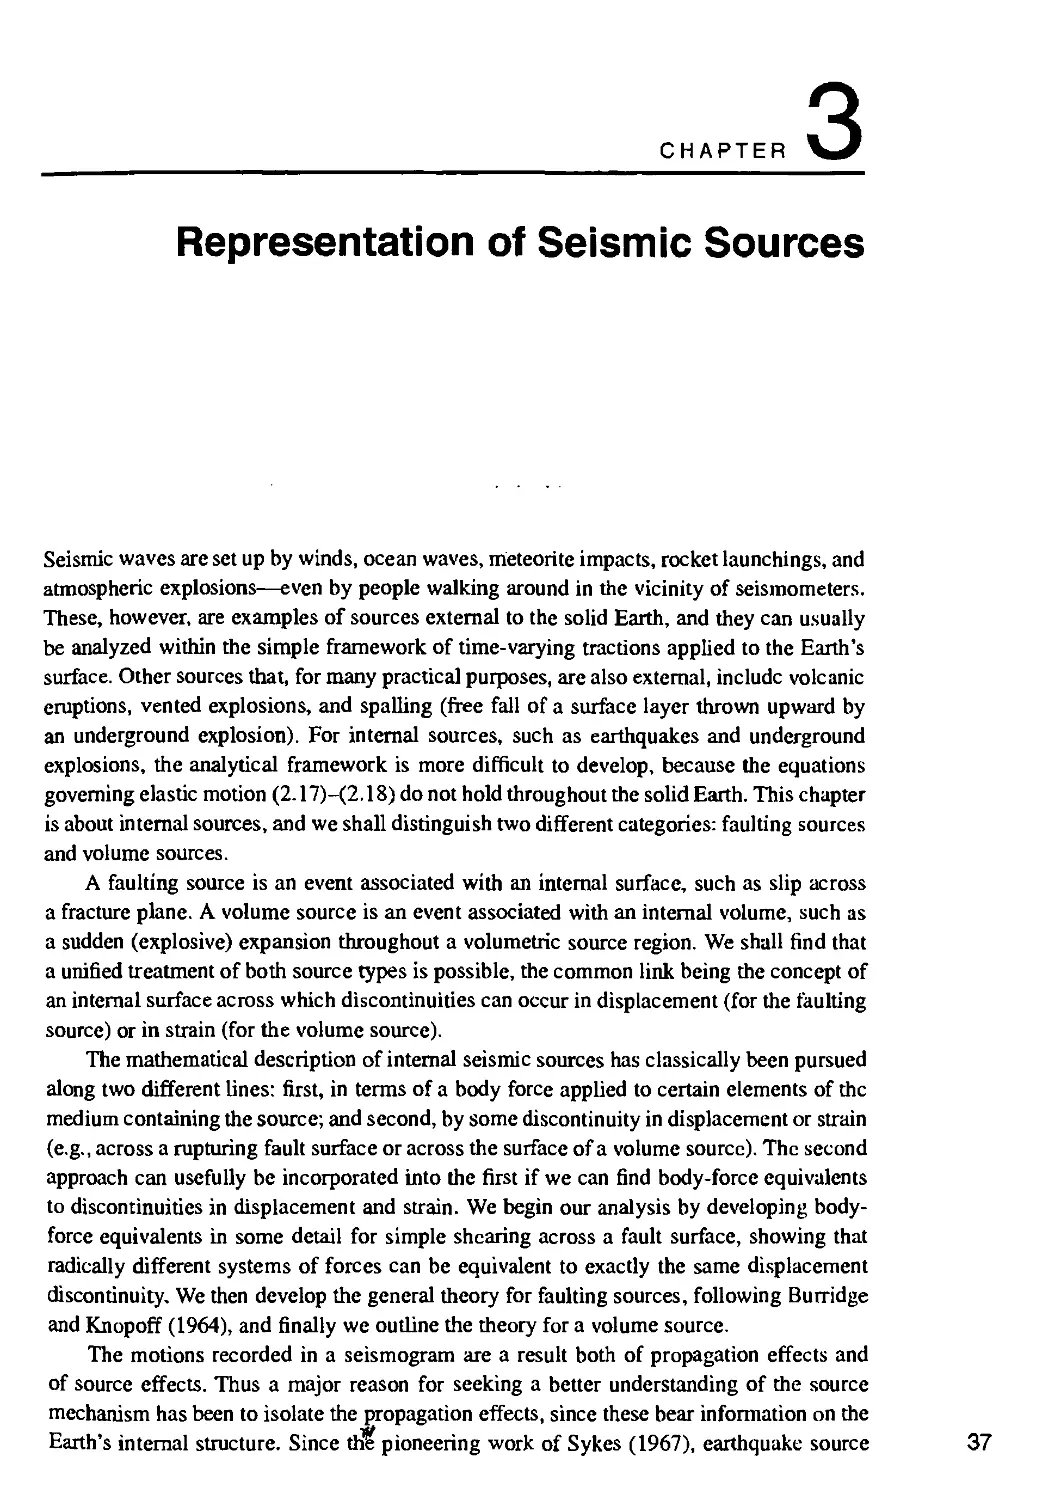 3. REPRESENTATION OF SEISMIC SOURCES